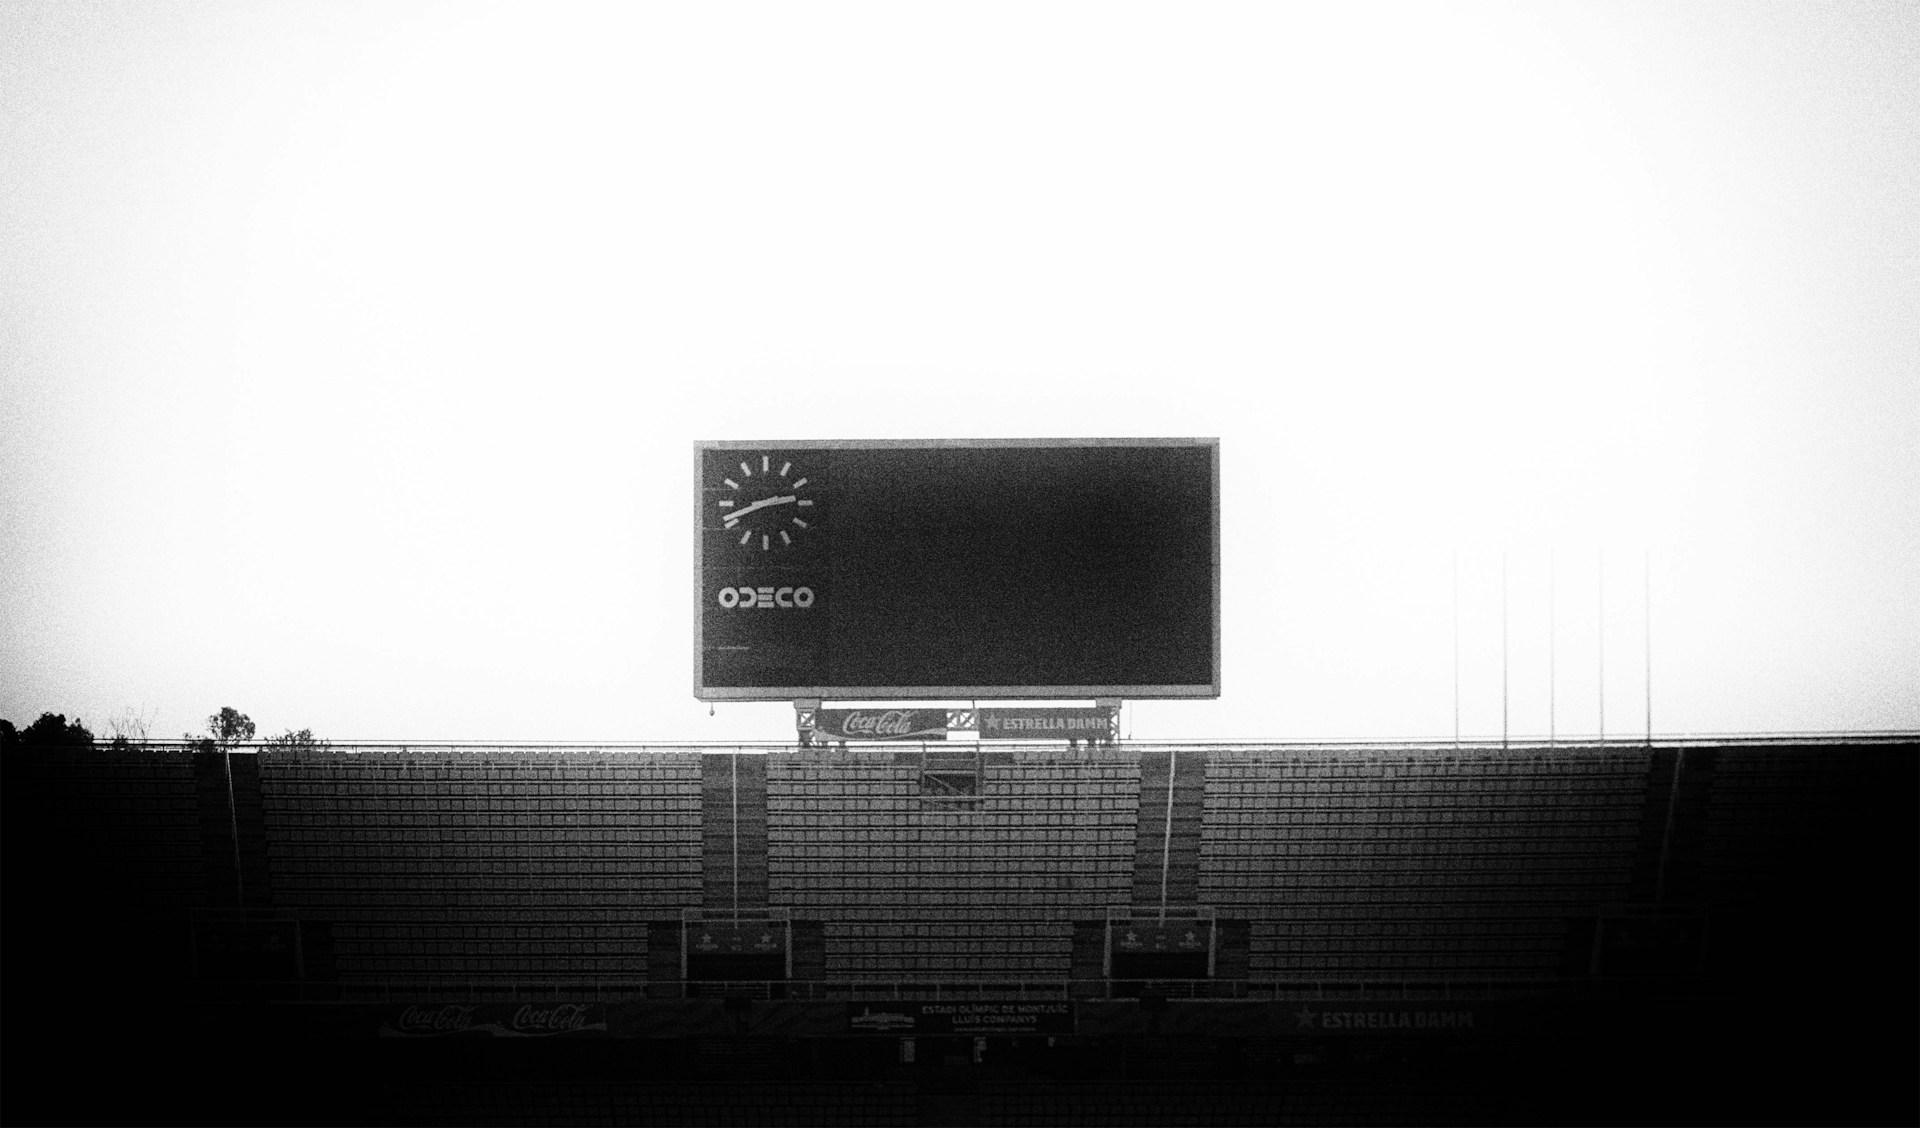 Stadium LED Screen